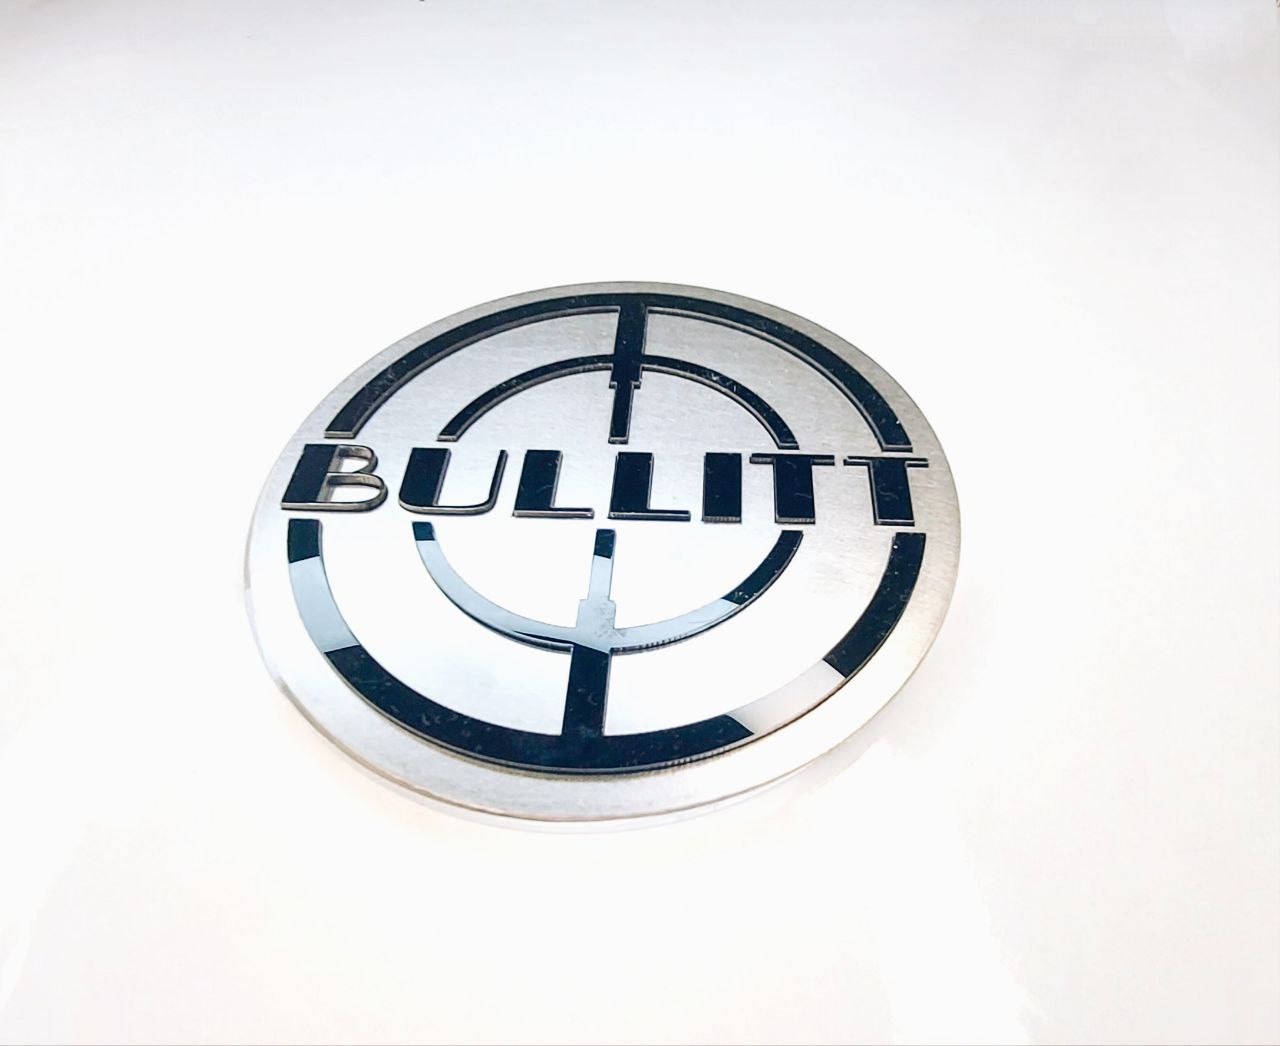 Ford Mustang stainless steel Radiator Grille emblem with Bullitt logo (type 2)